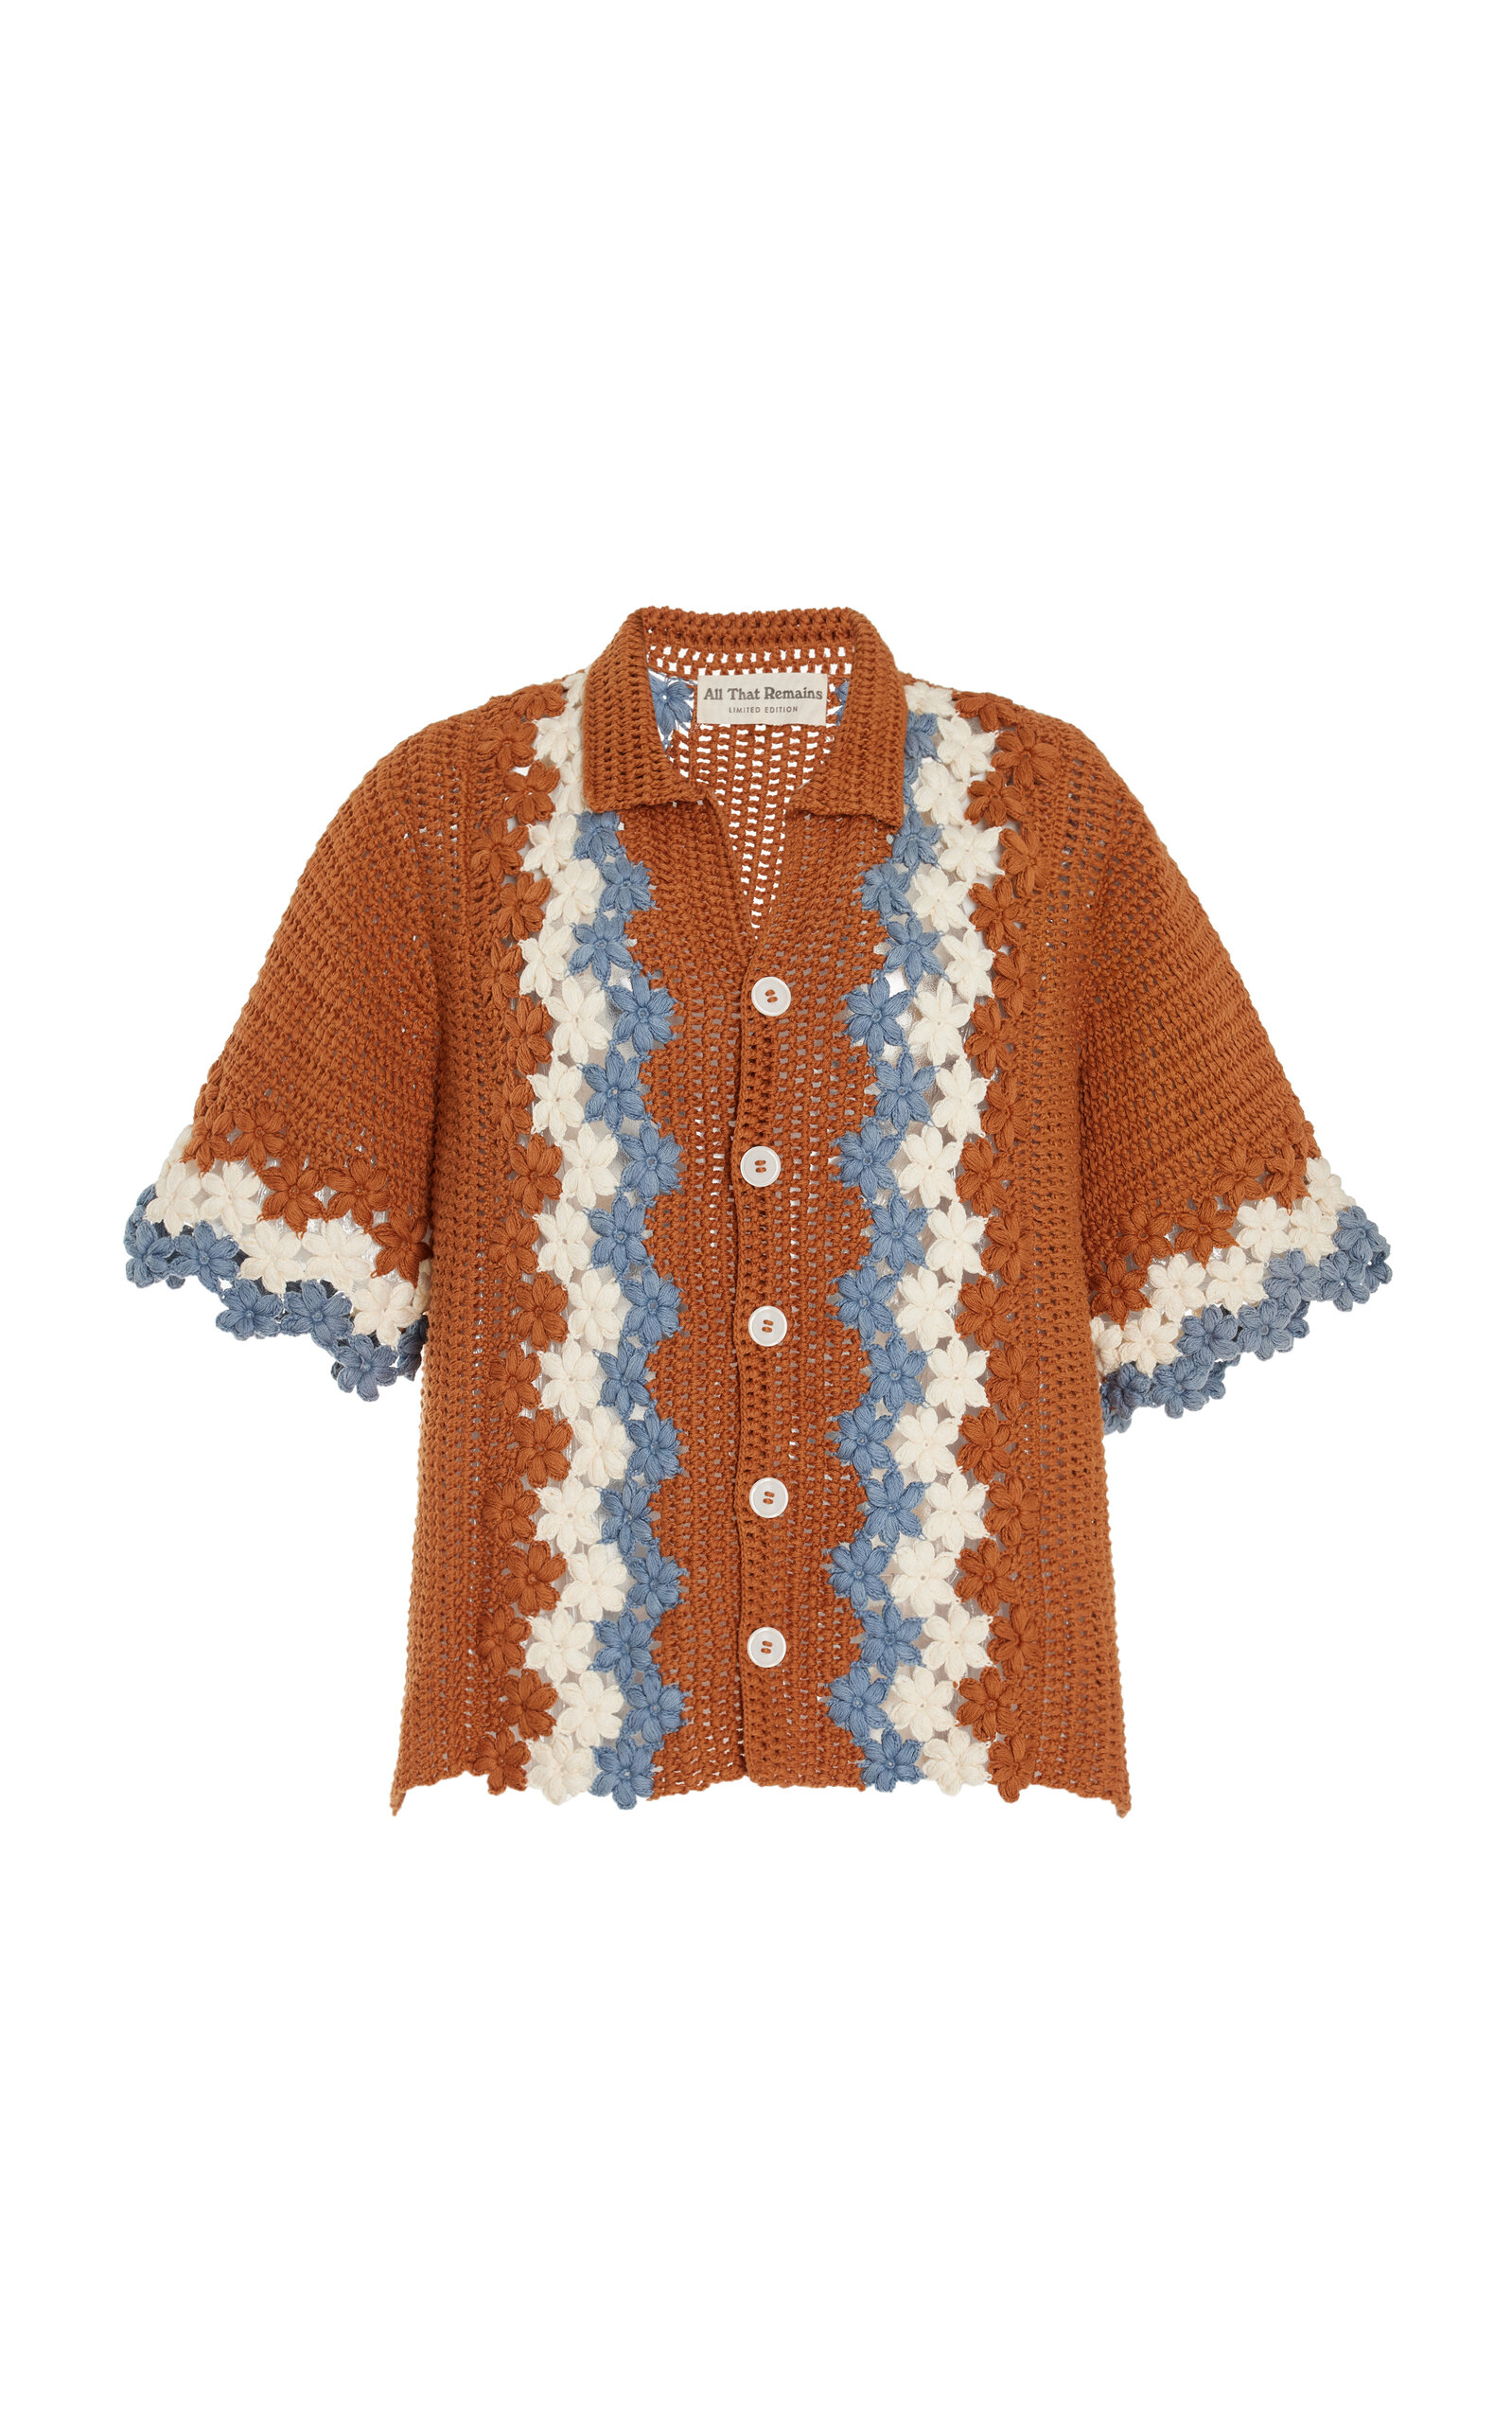 Daisy Crocheted Cotton Shirt